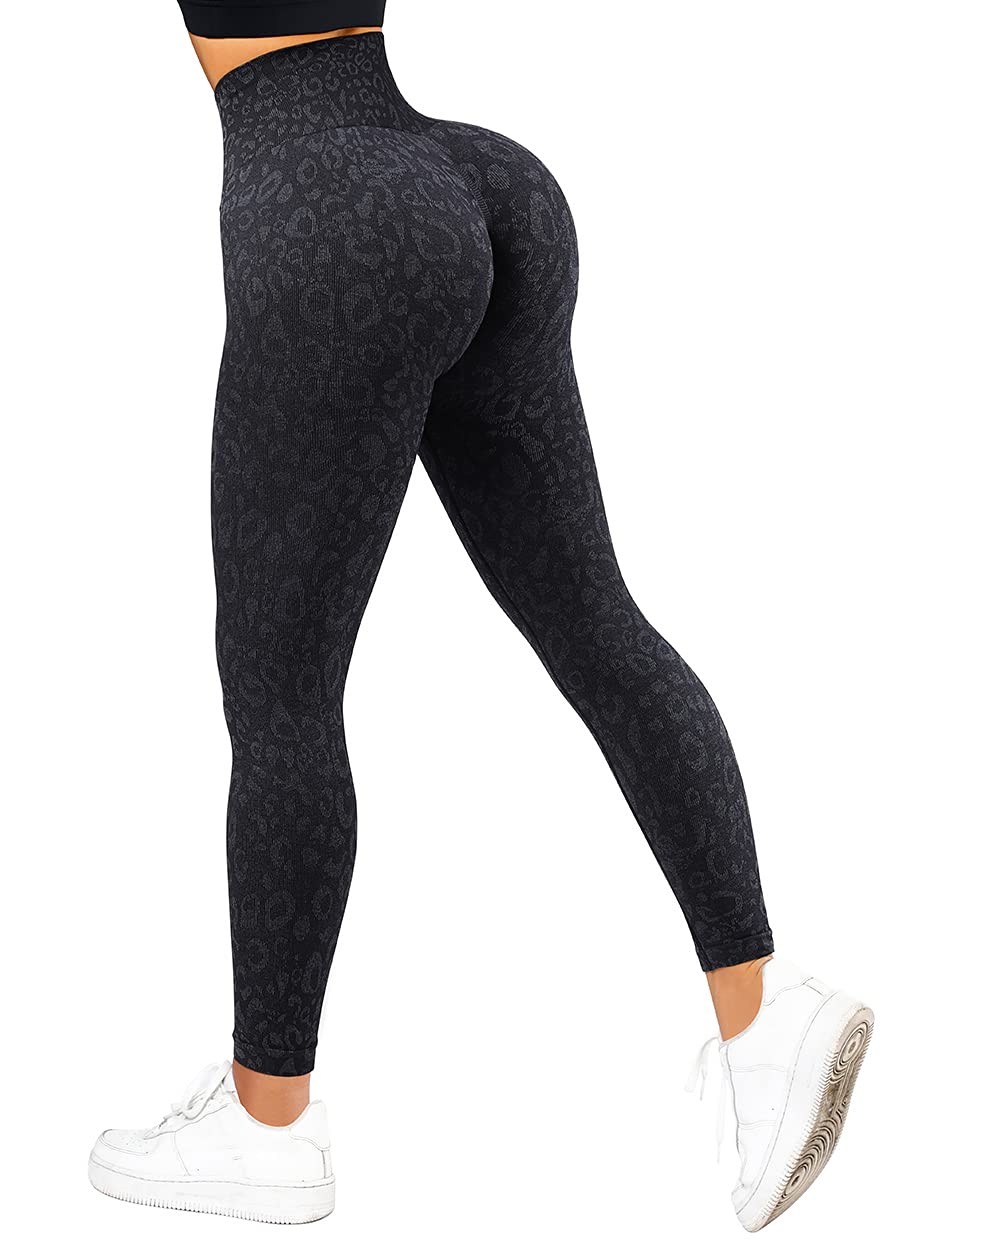 SUUKSESS Women Scrunch Butt Lifting Seamless Leggings Booty High Waisted Workout Yoga Pants